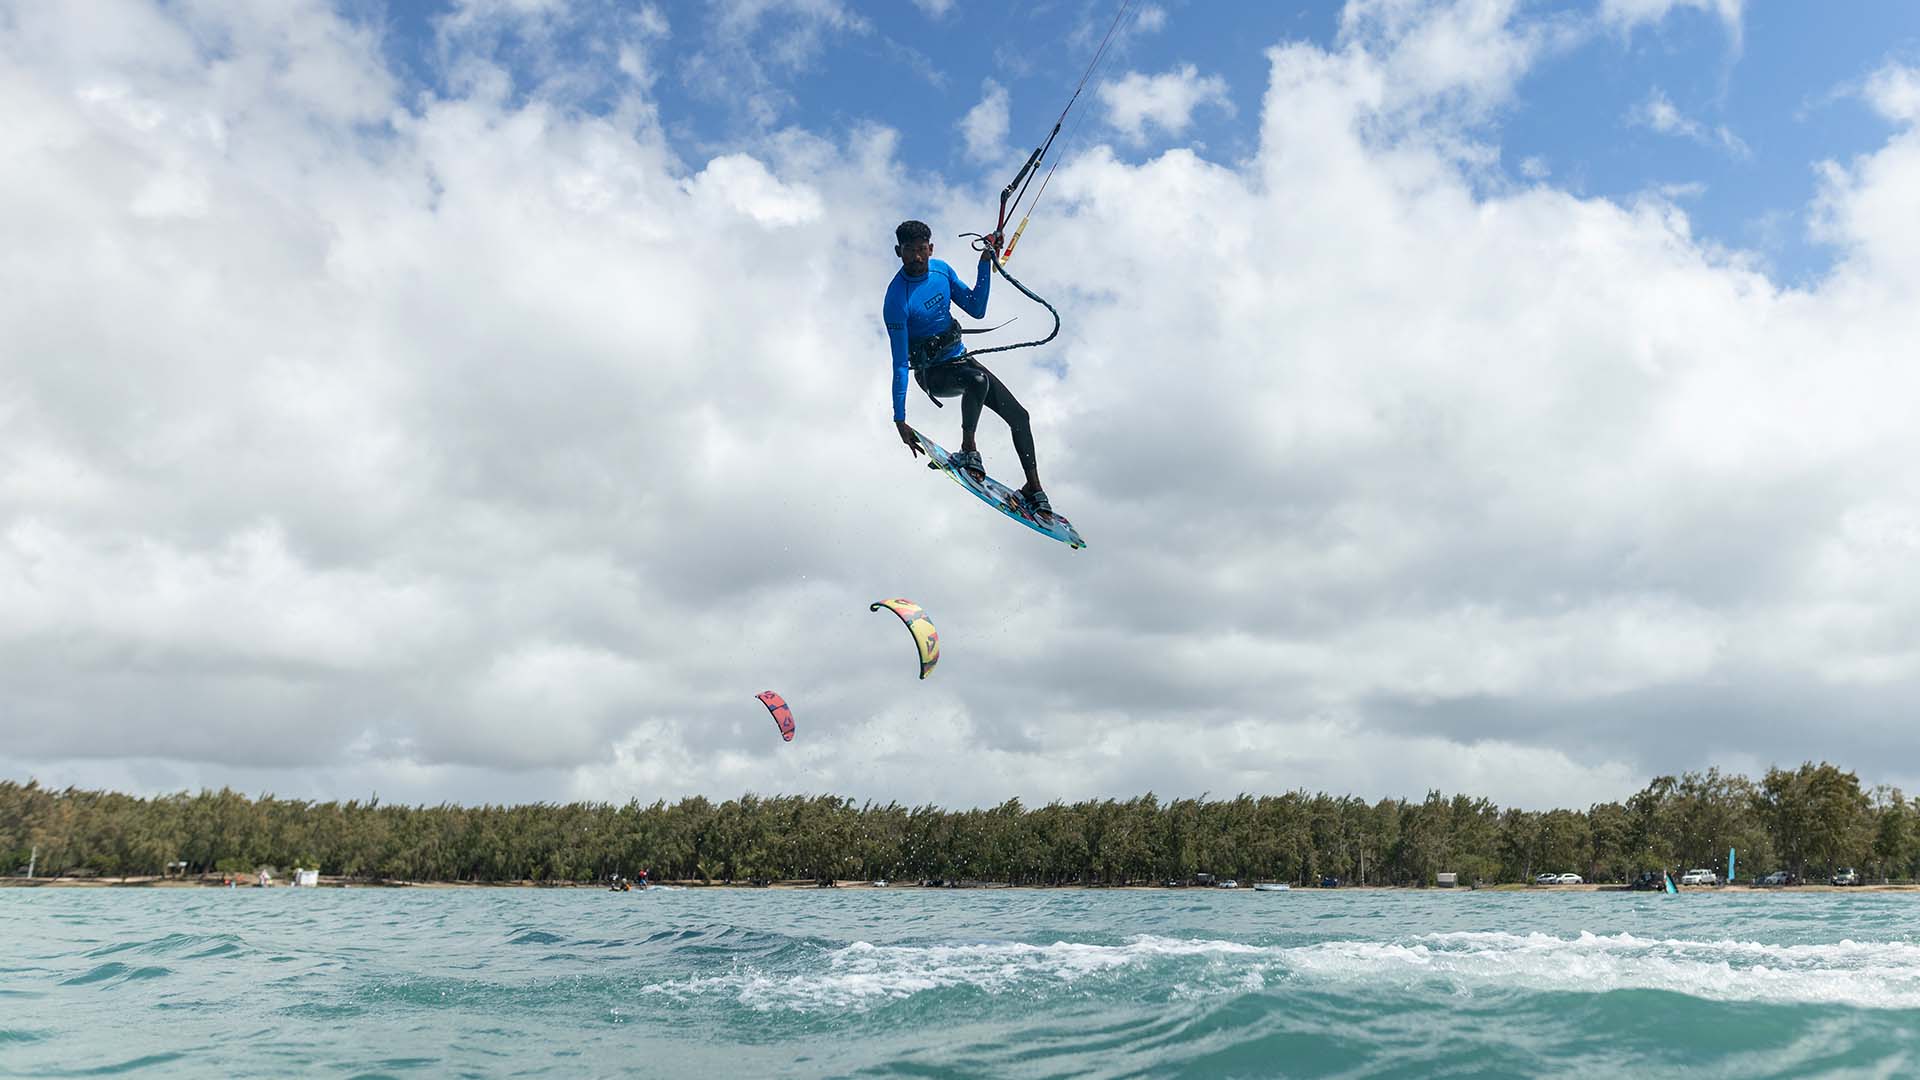 kitesurf jump in turquoise water